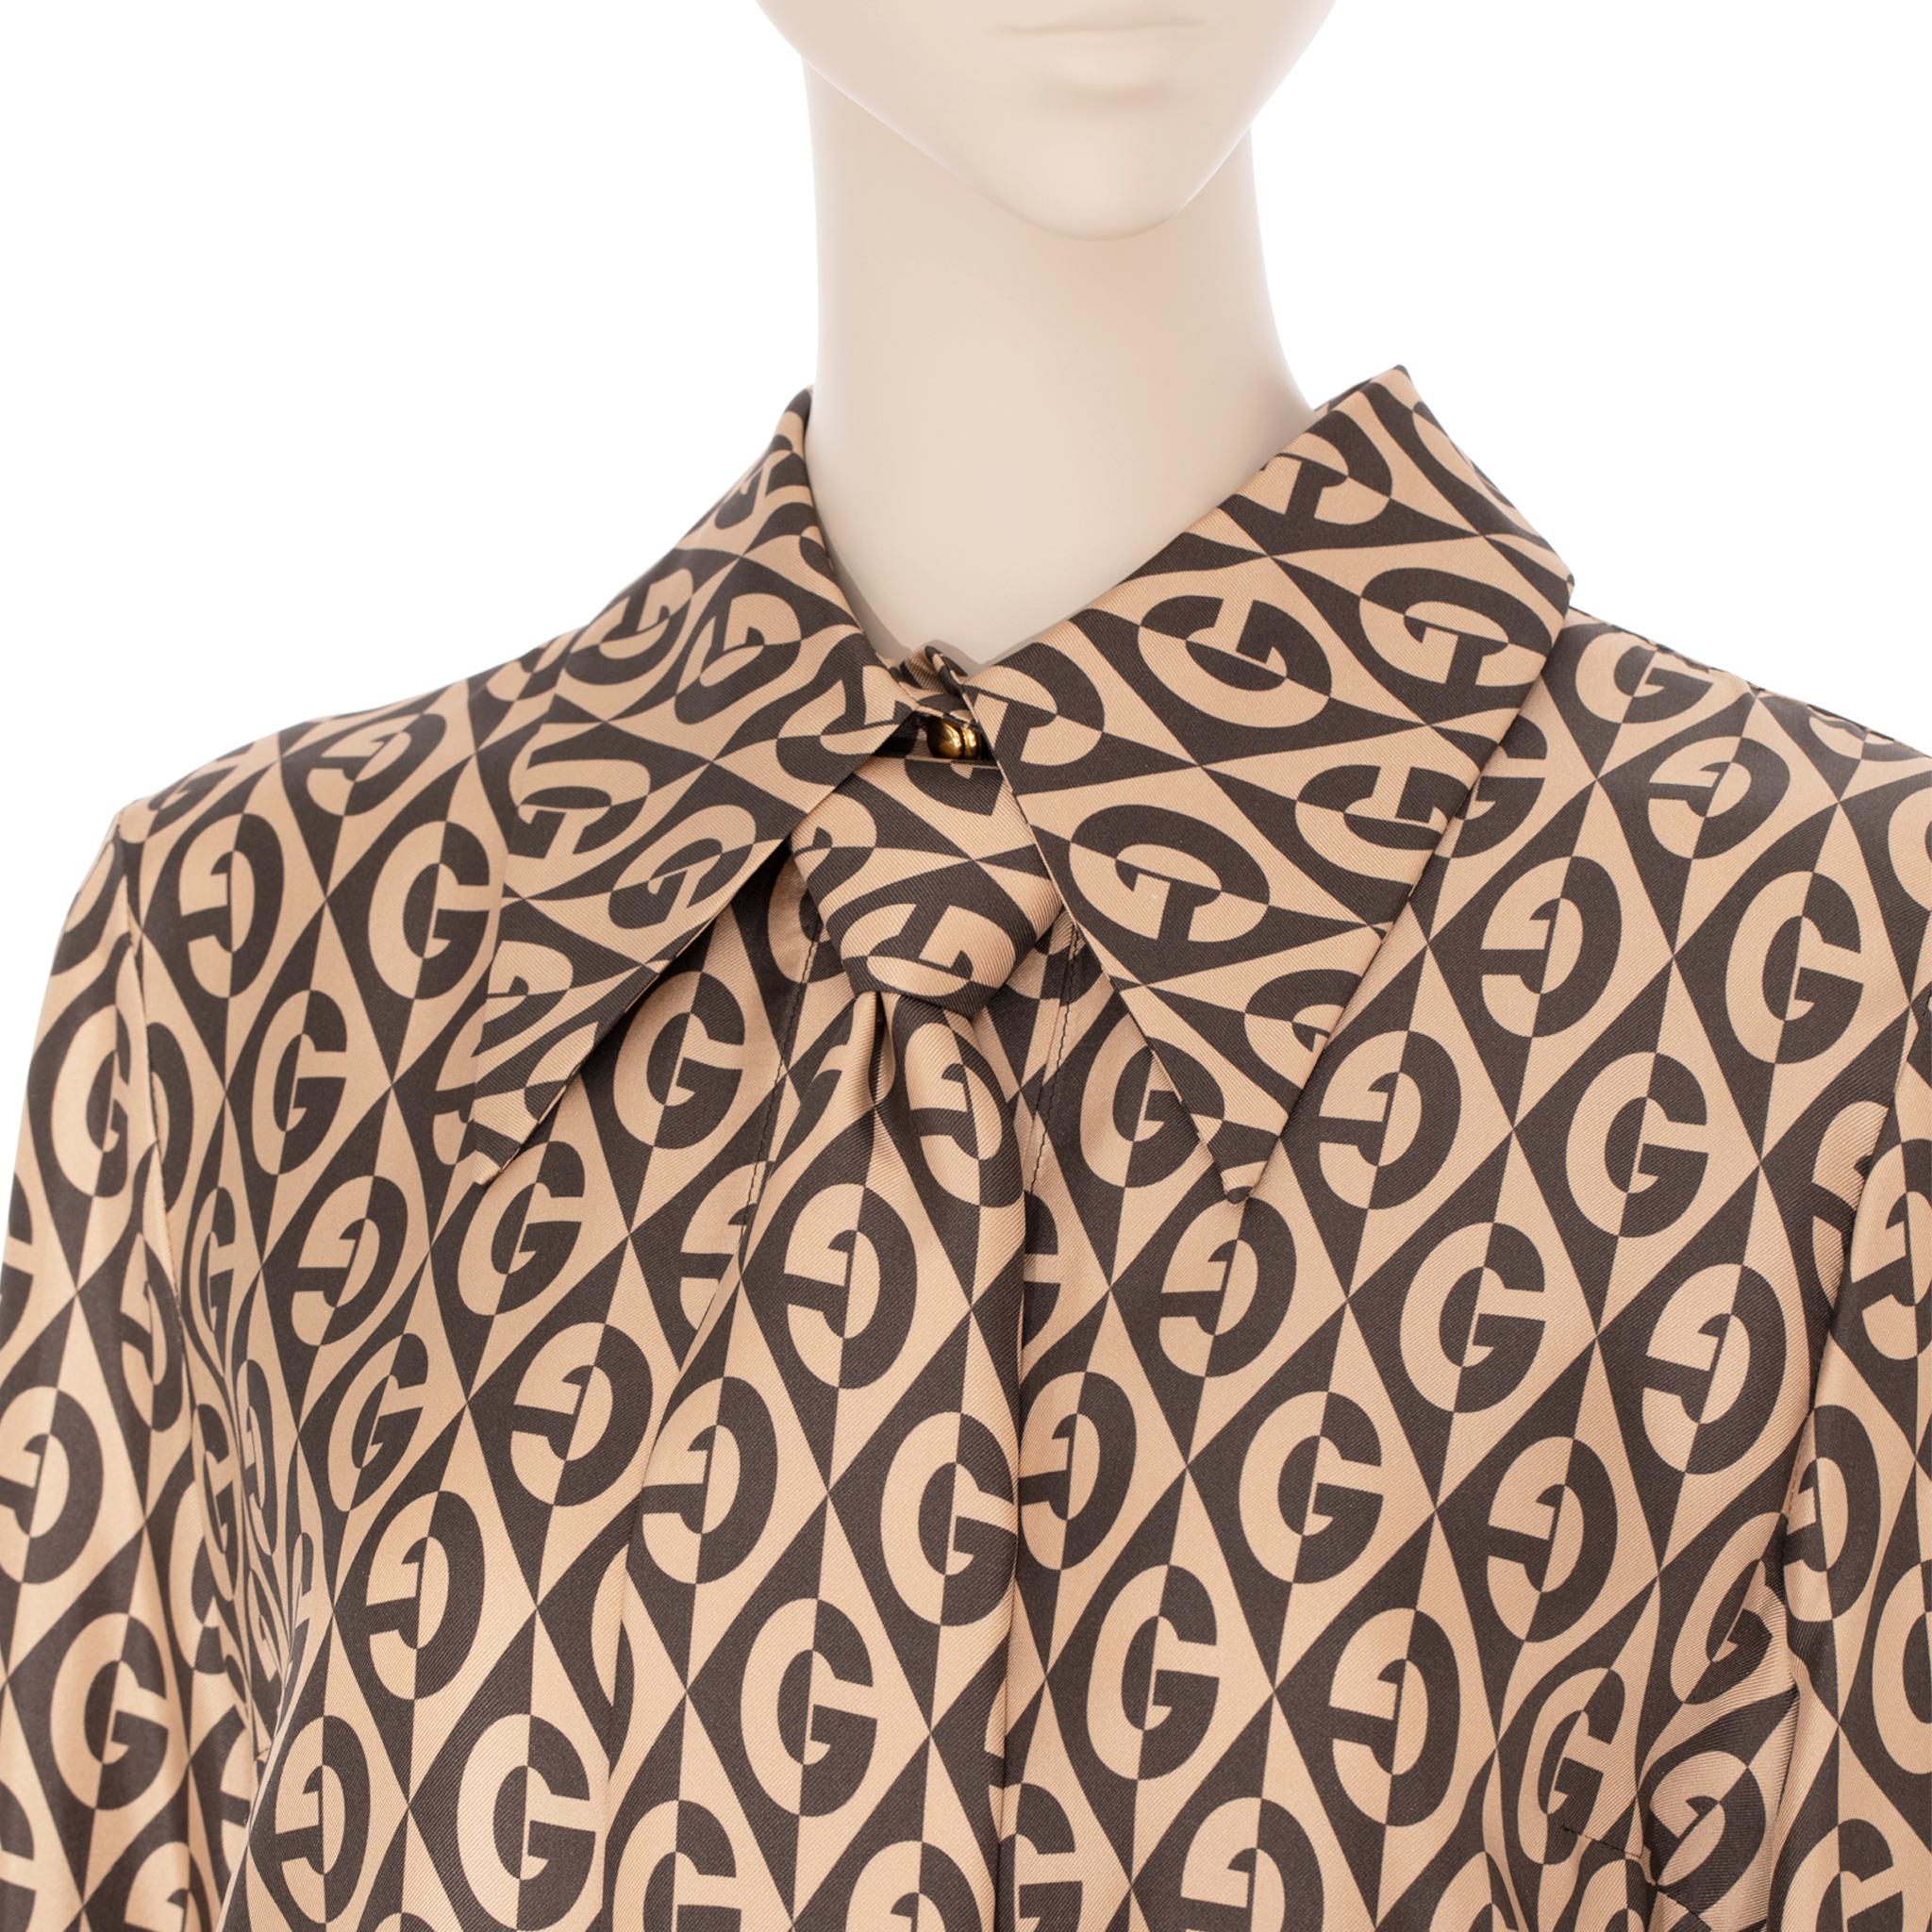 Gucci G Rhombus Brown & Ivory Print Dress Silk 40 IT For Sale 2